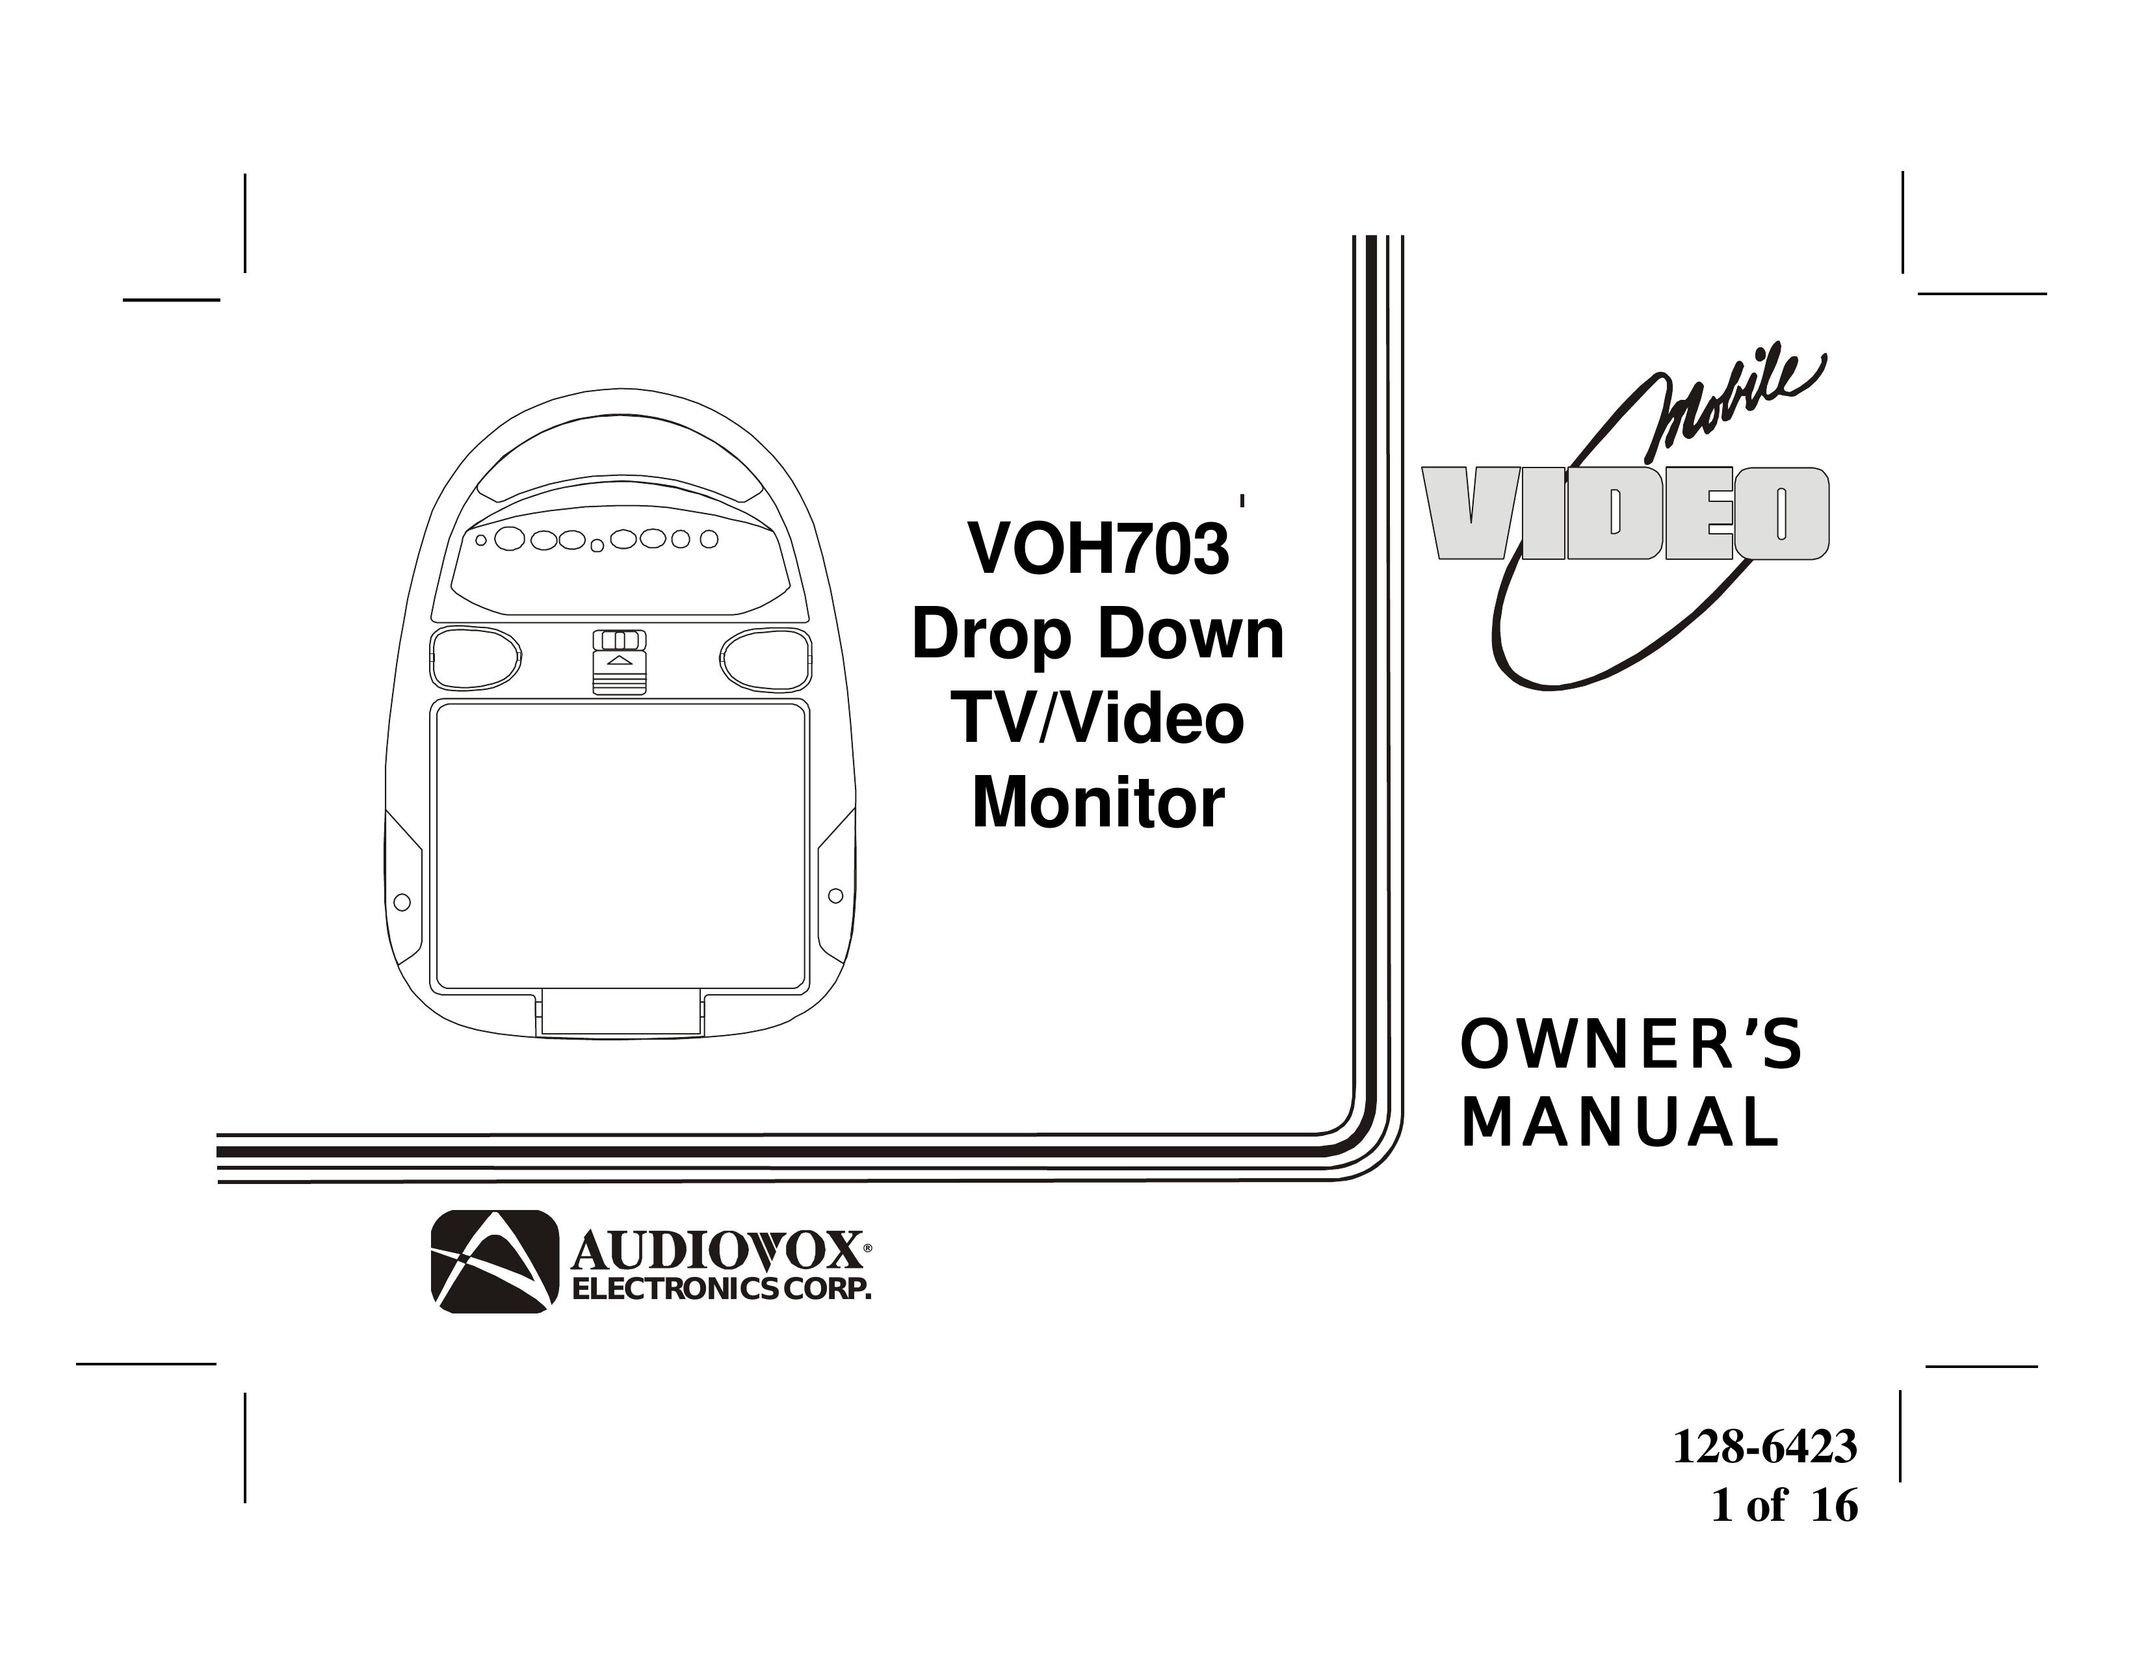 Audiovox VOH703 Computer Monitor User Manual